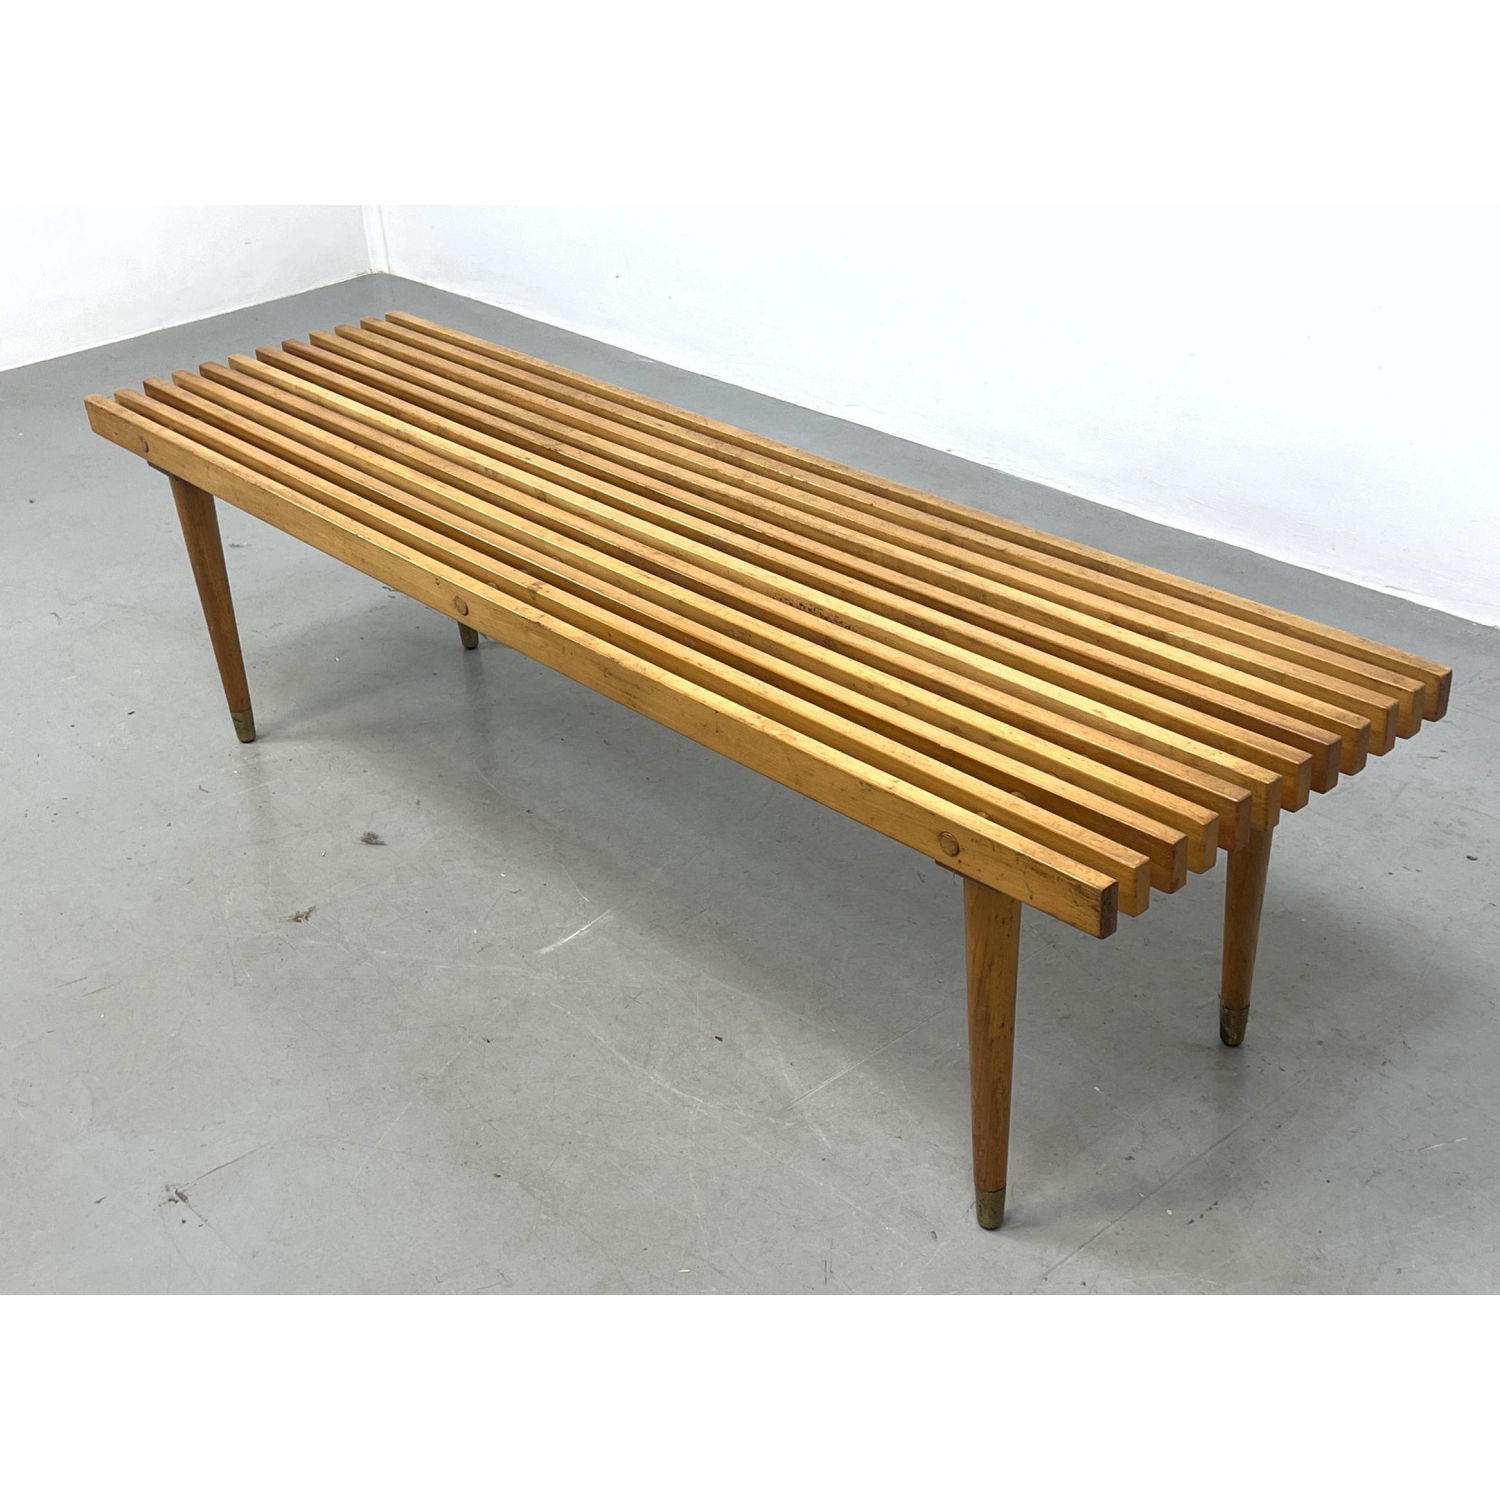 Modernist Wood Slat Bench Coffee 2b88a6